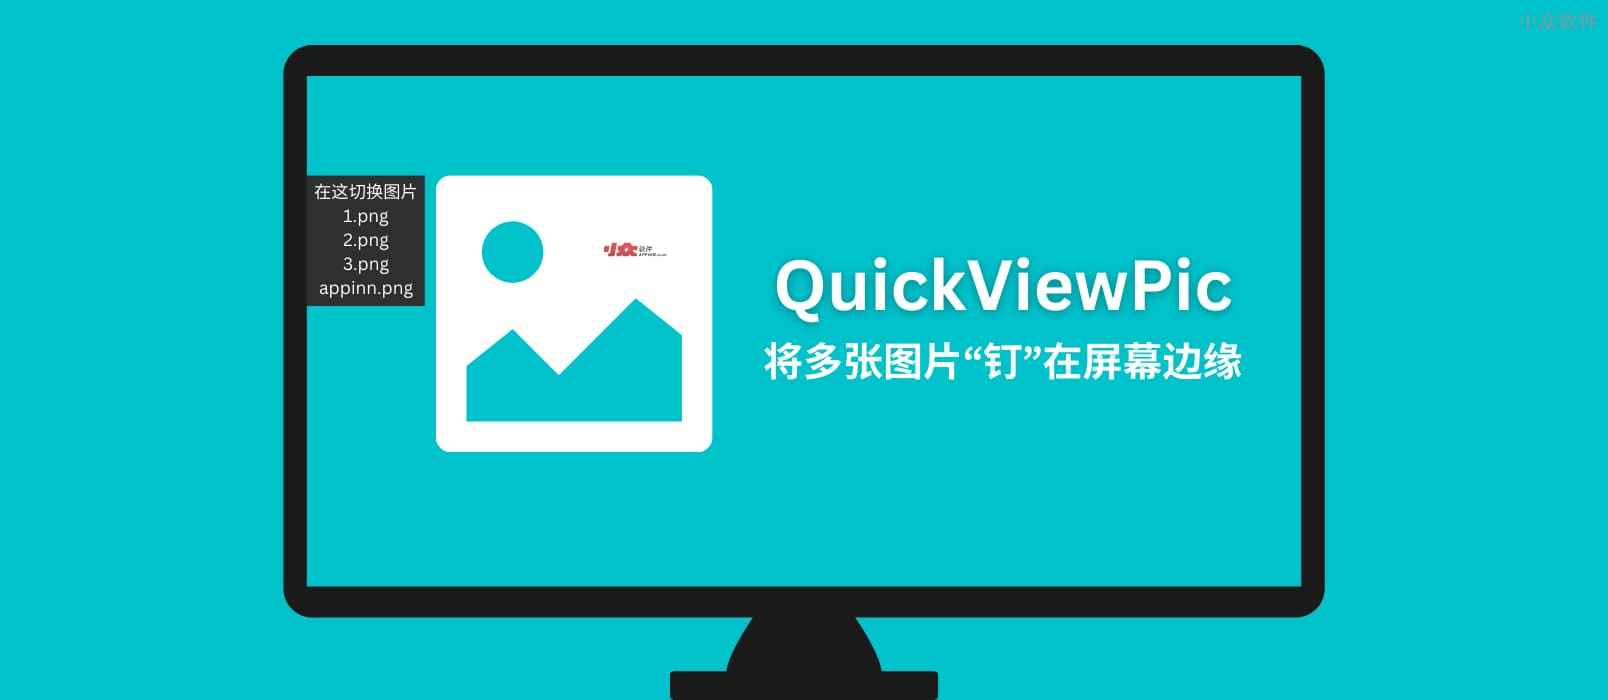 QuickViewPic – 将多张图片“钉”在屏幕边缘，快速切换查看[Windows]